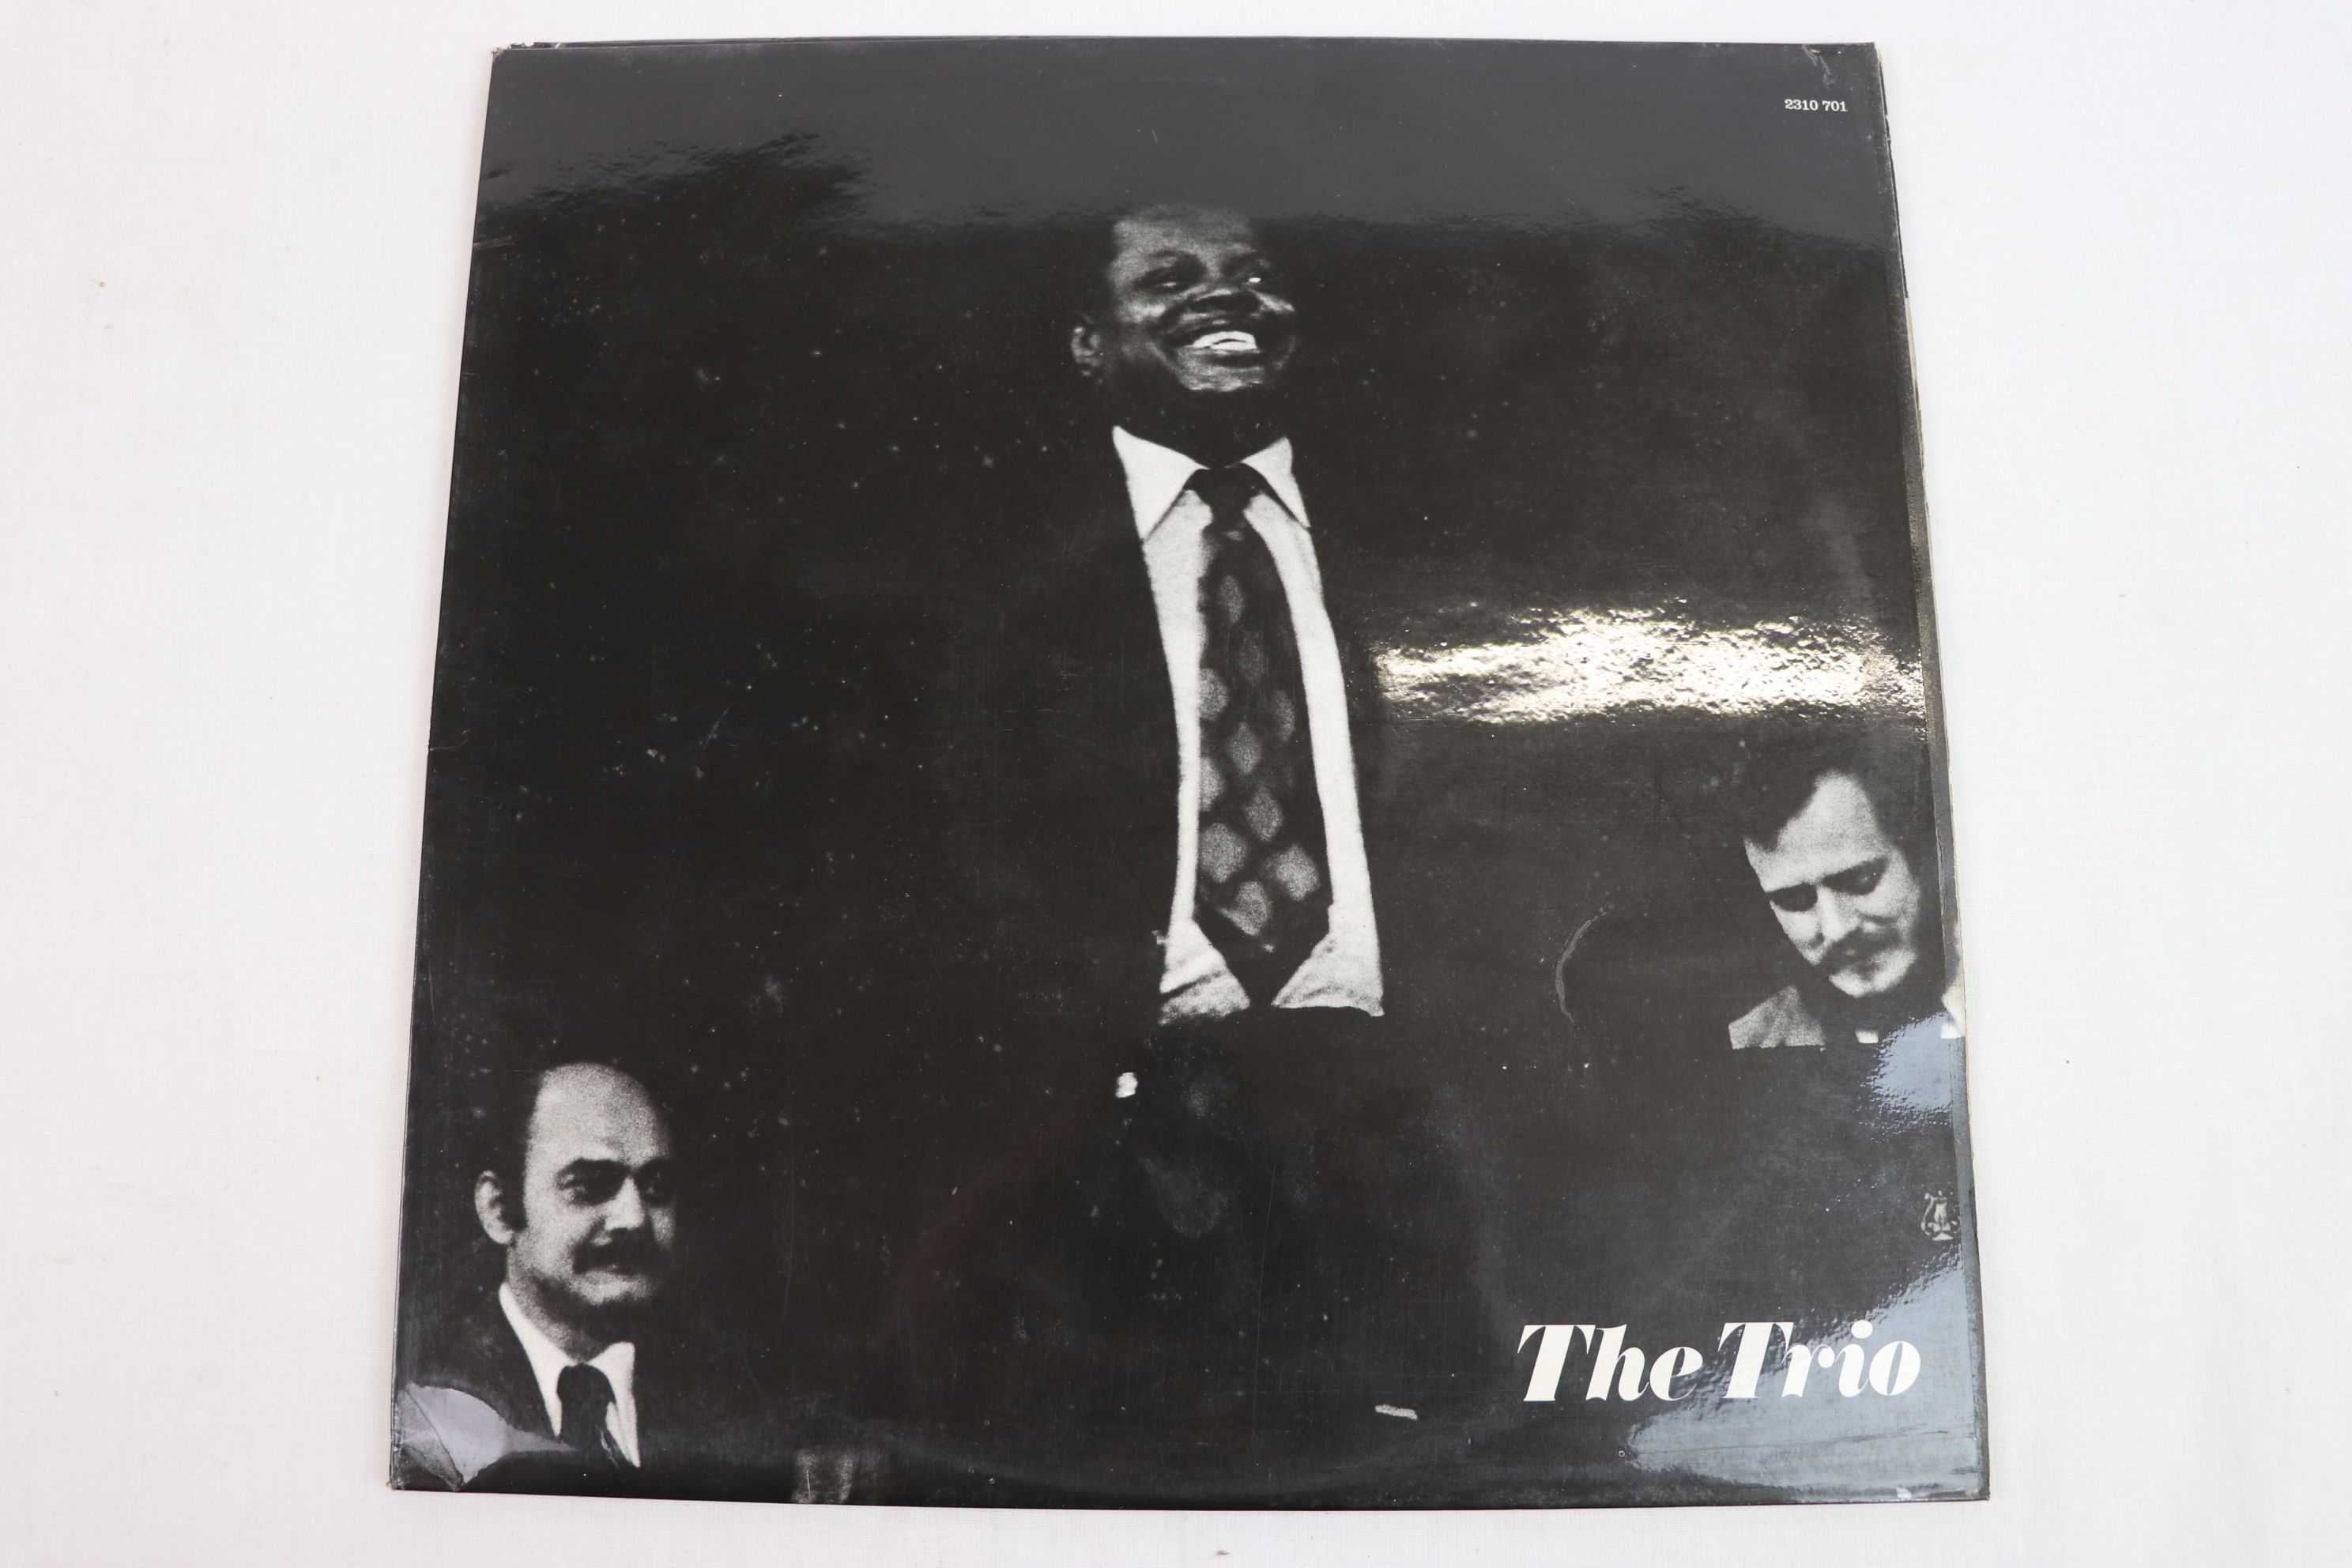 Vinyl - Collection of 15 x Jazz vinyl LP's to include Meditations - John Coltrane (Impulse A- - Image 16 of 17